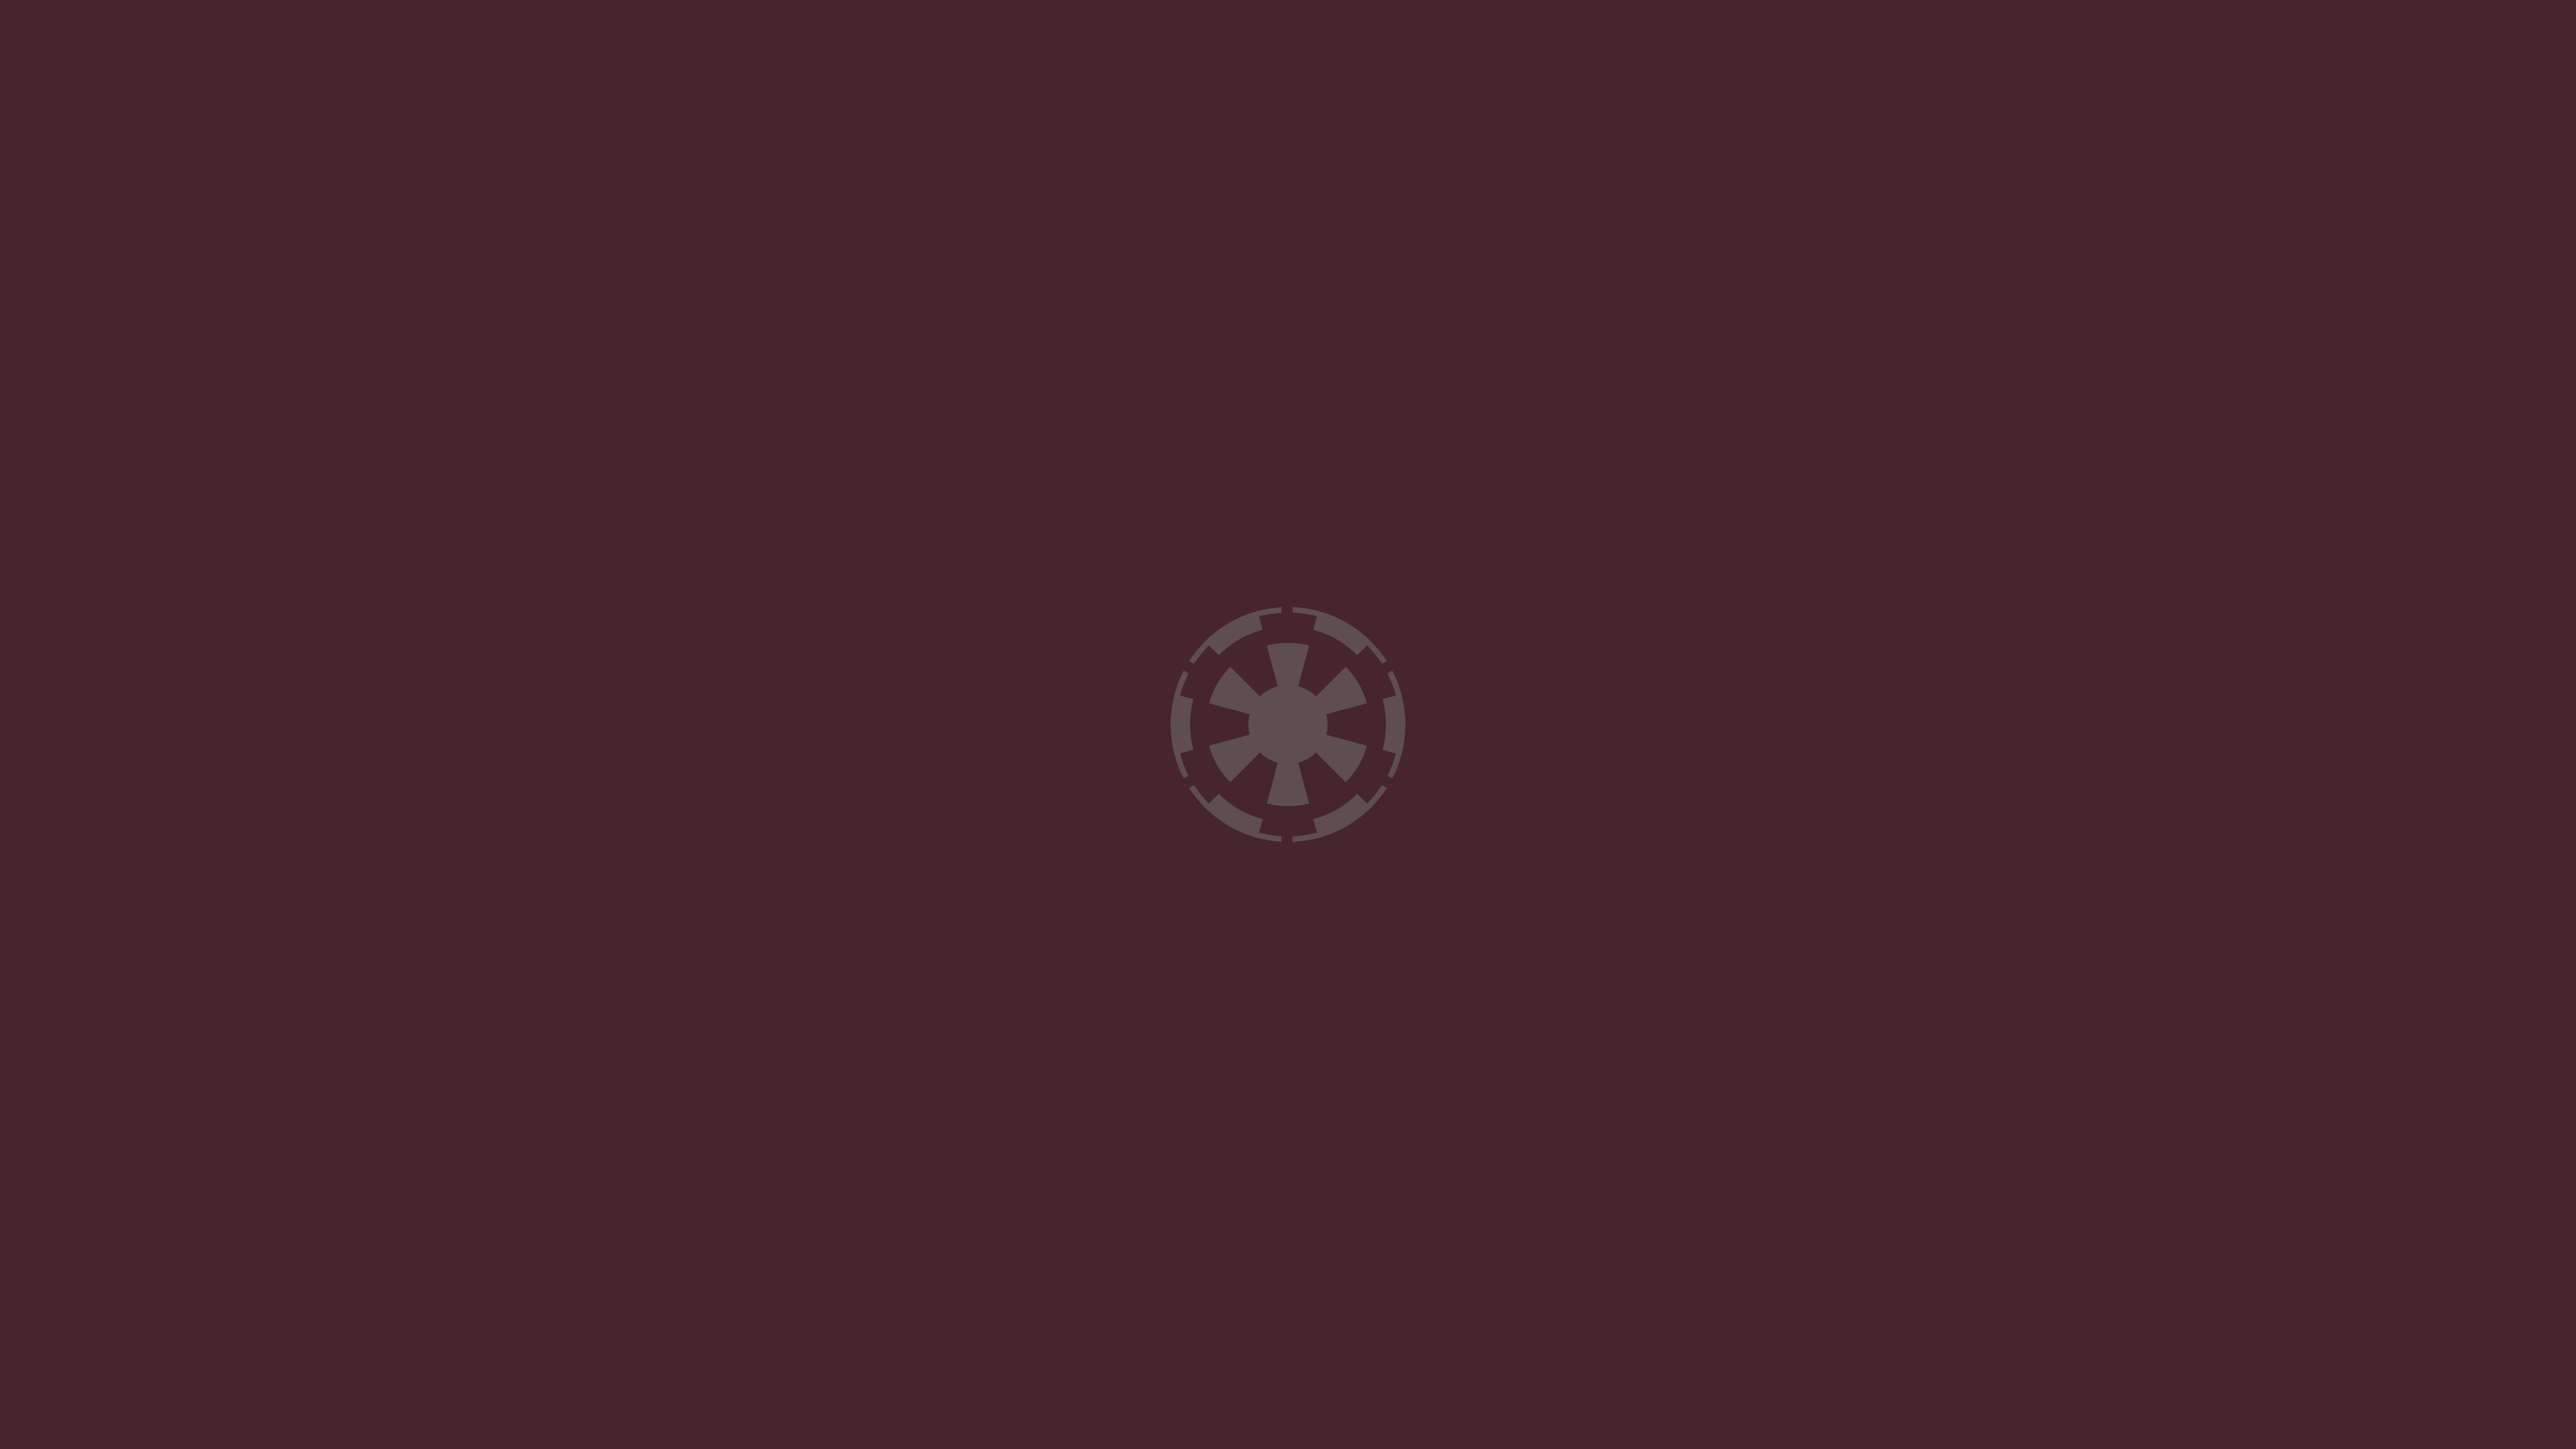 Star Wars Galactic Empire Minimalism 3840x2160